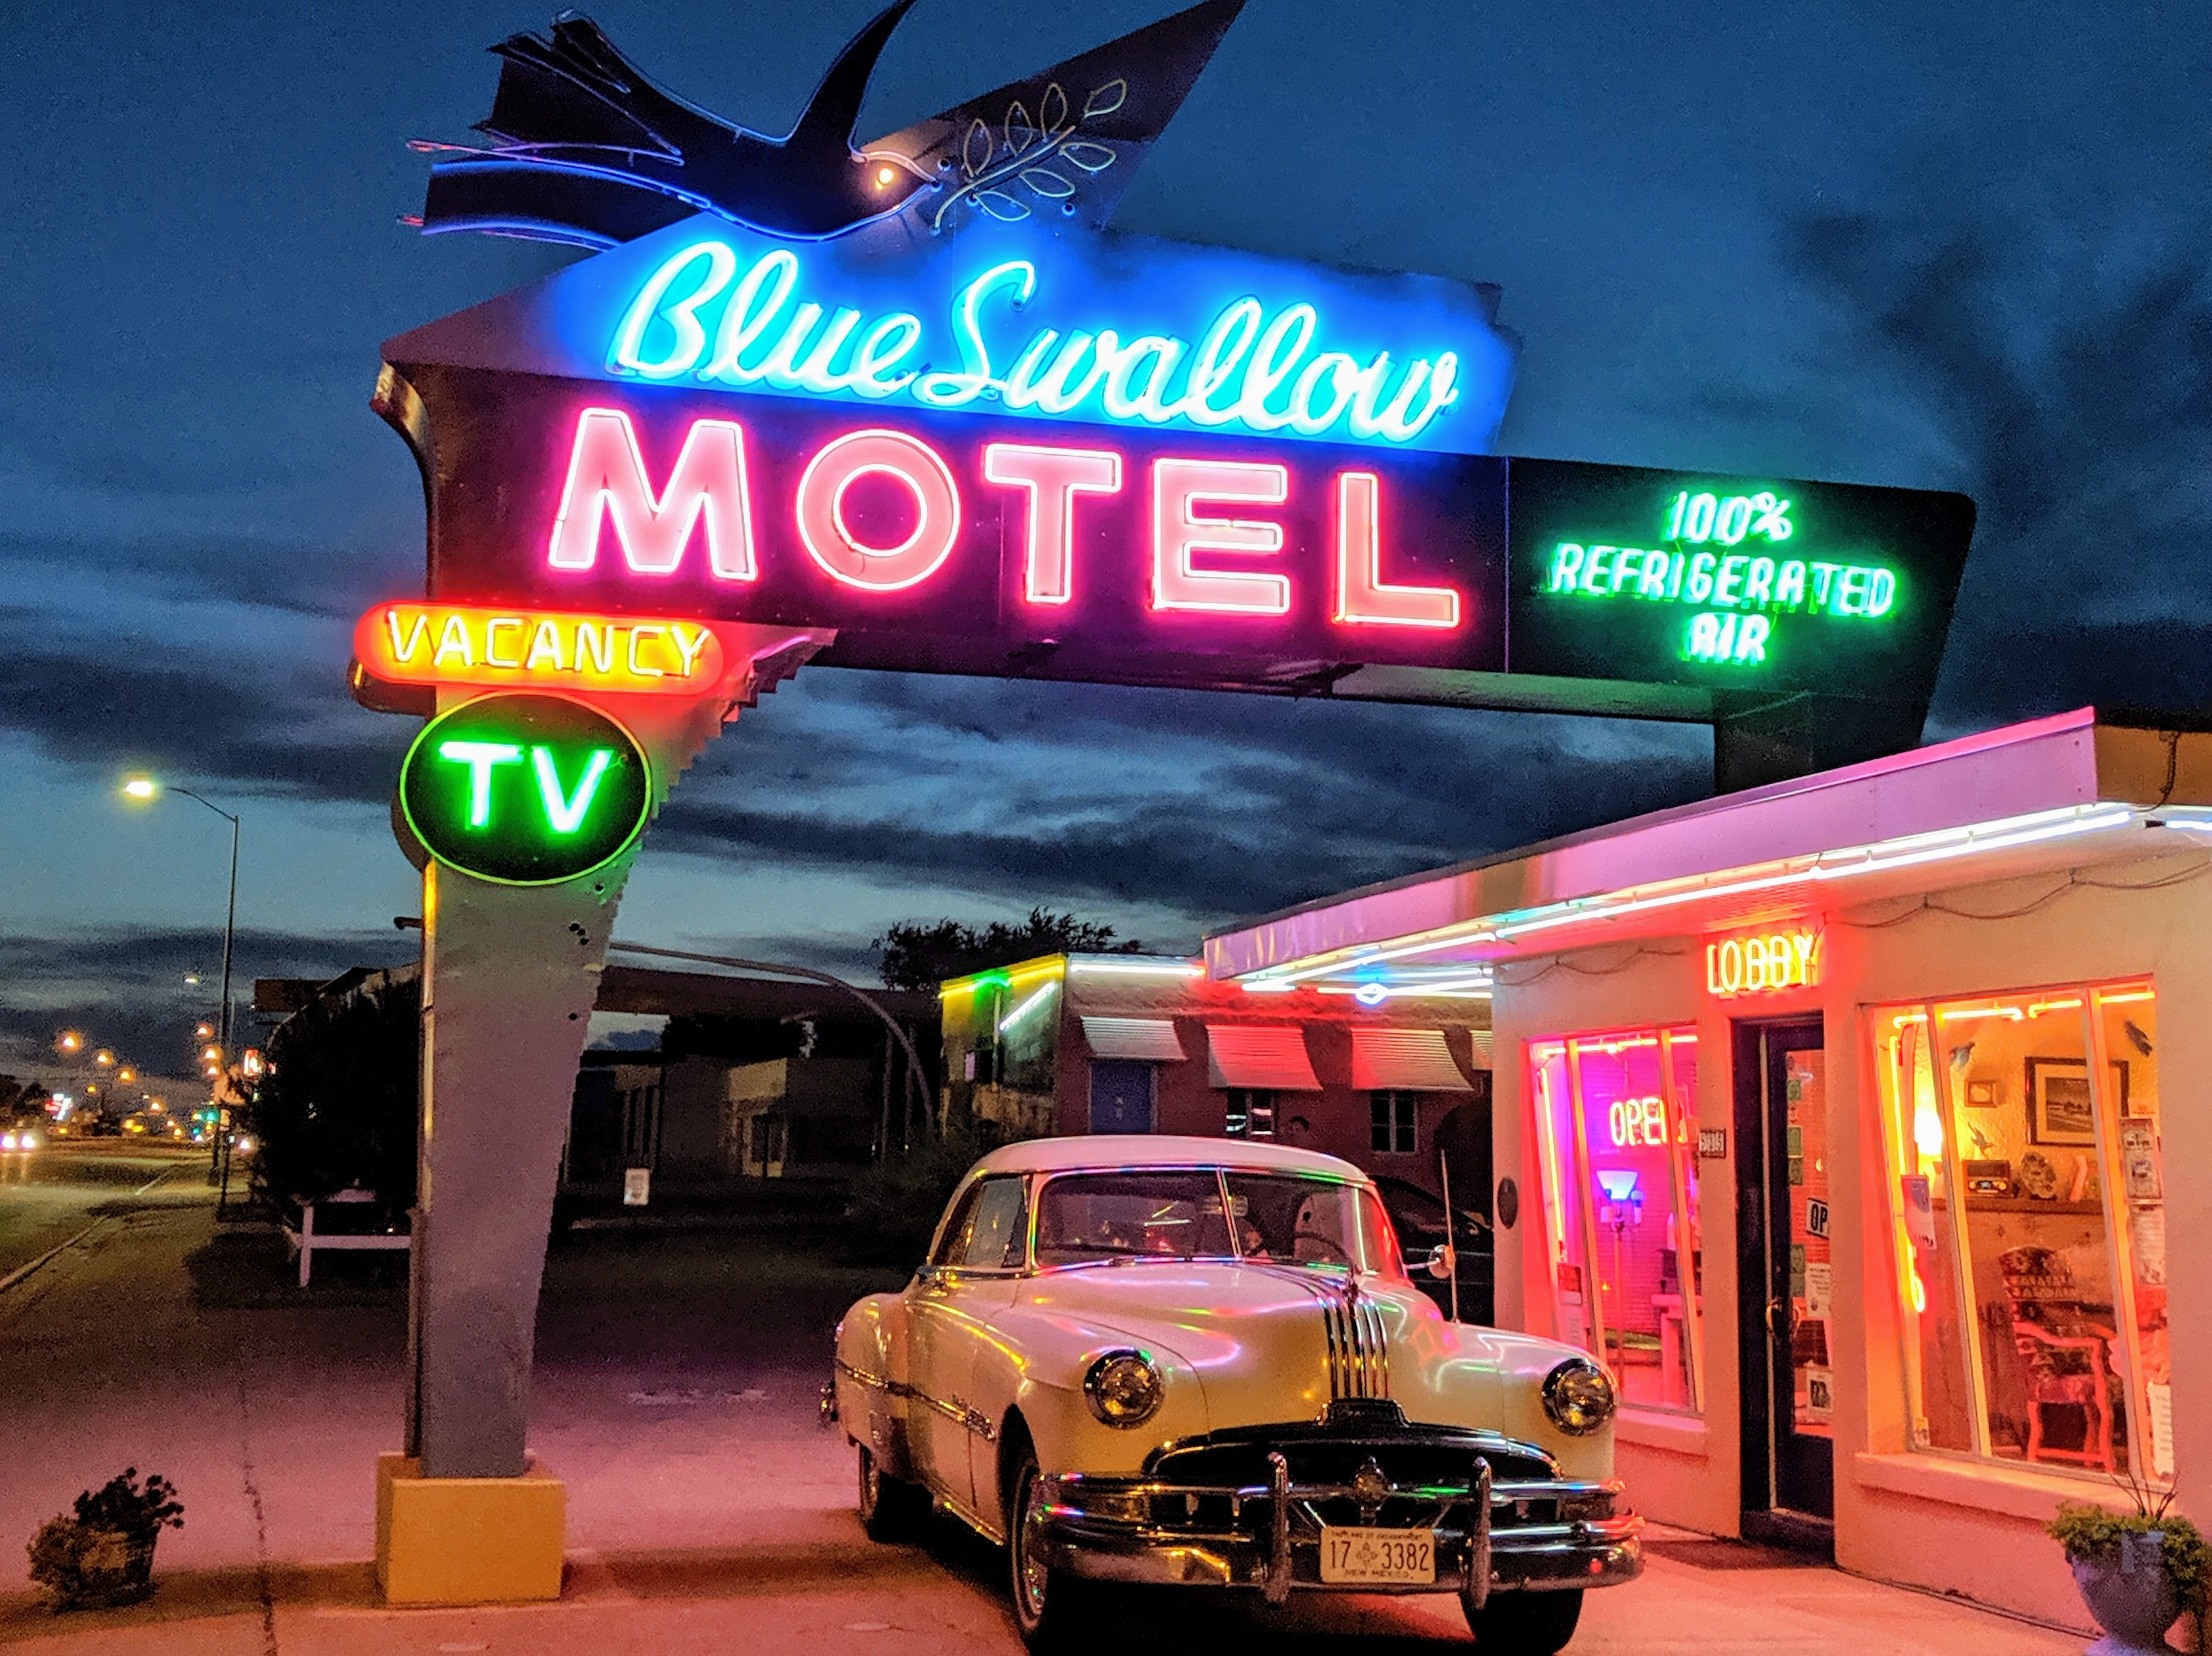 Blue Swallow Motel (Tucumcari, New Mexico) - Buyoya.